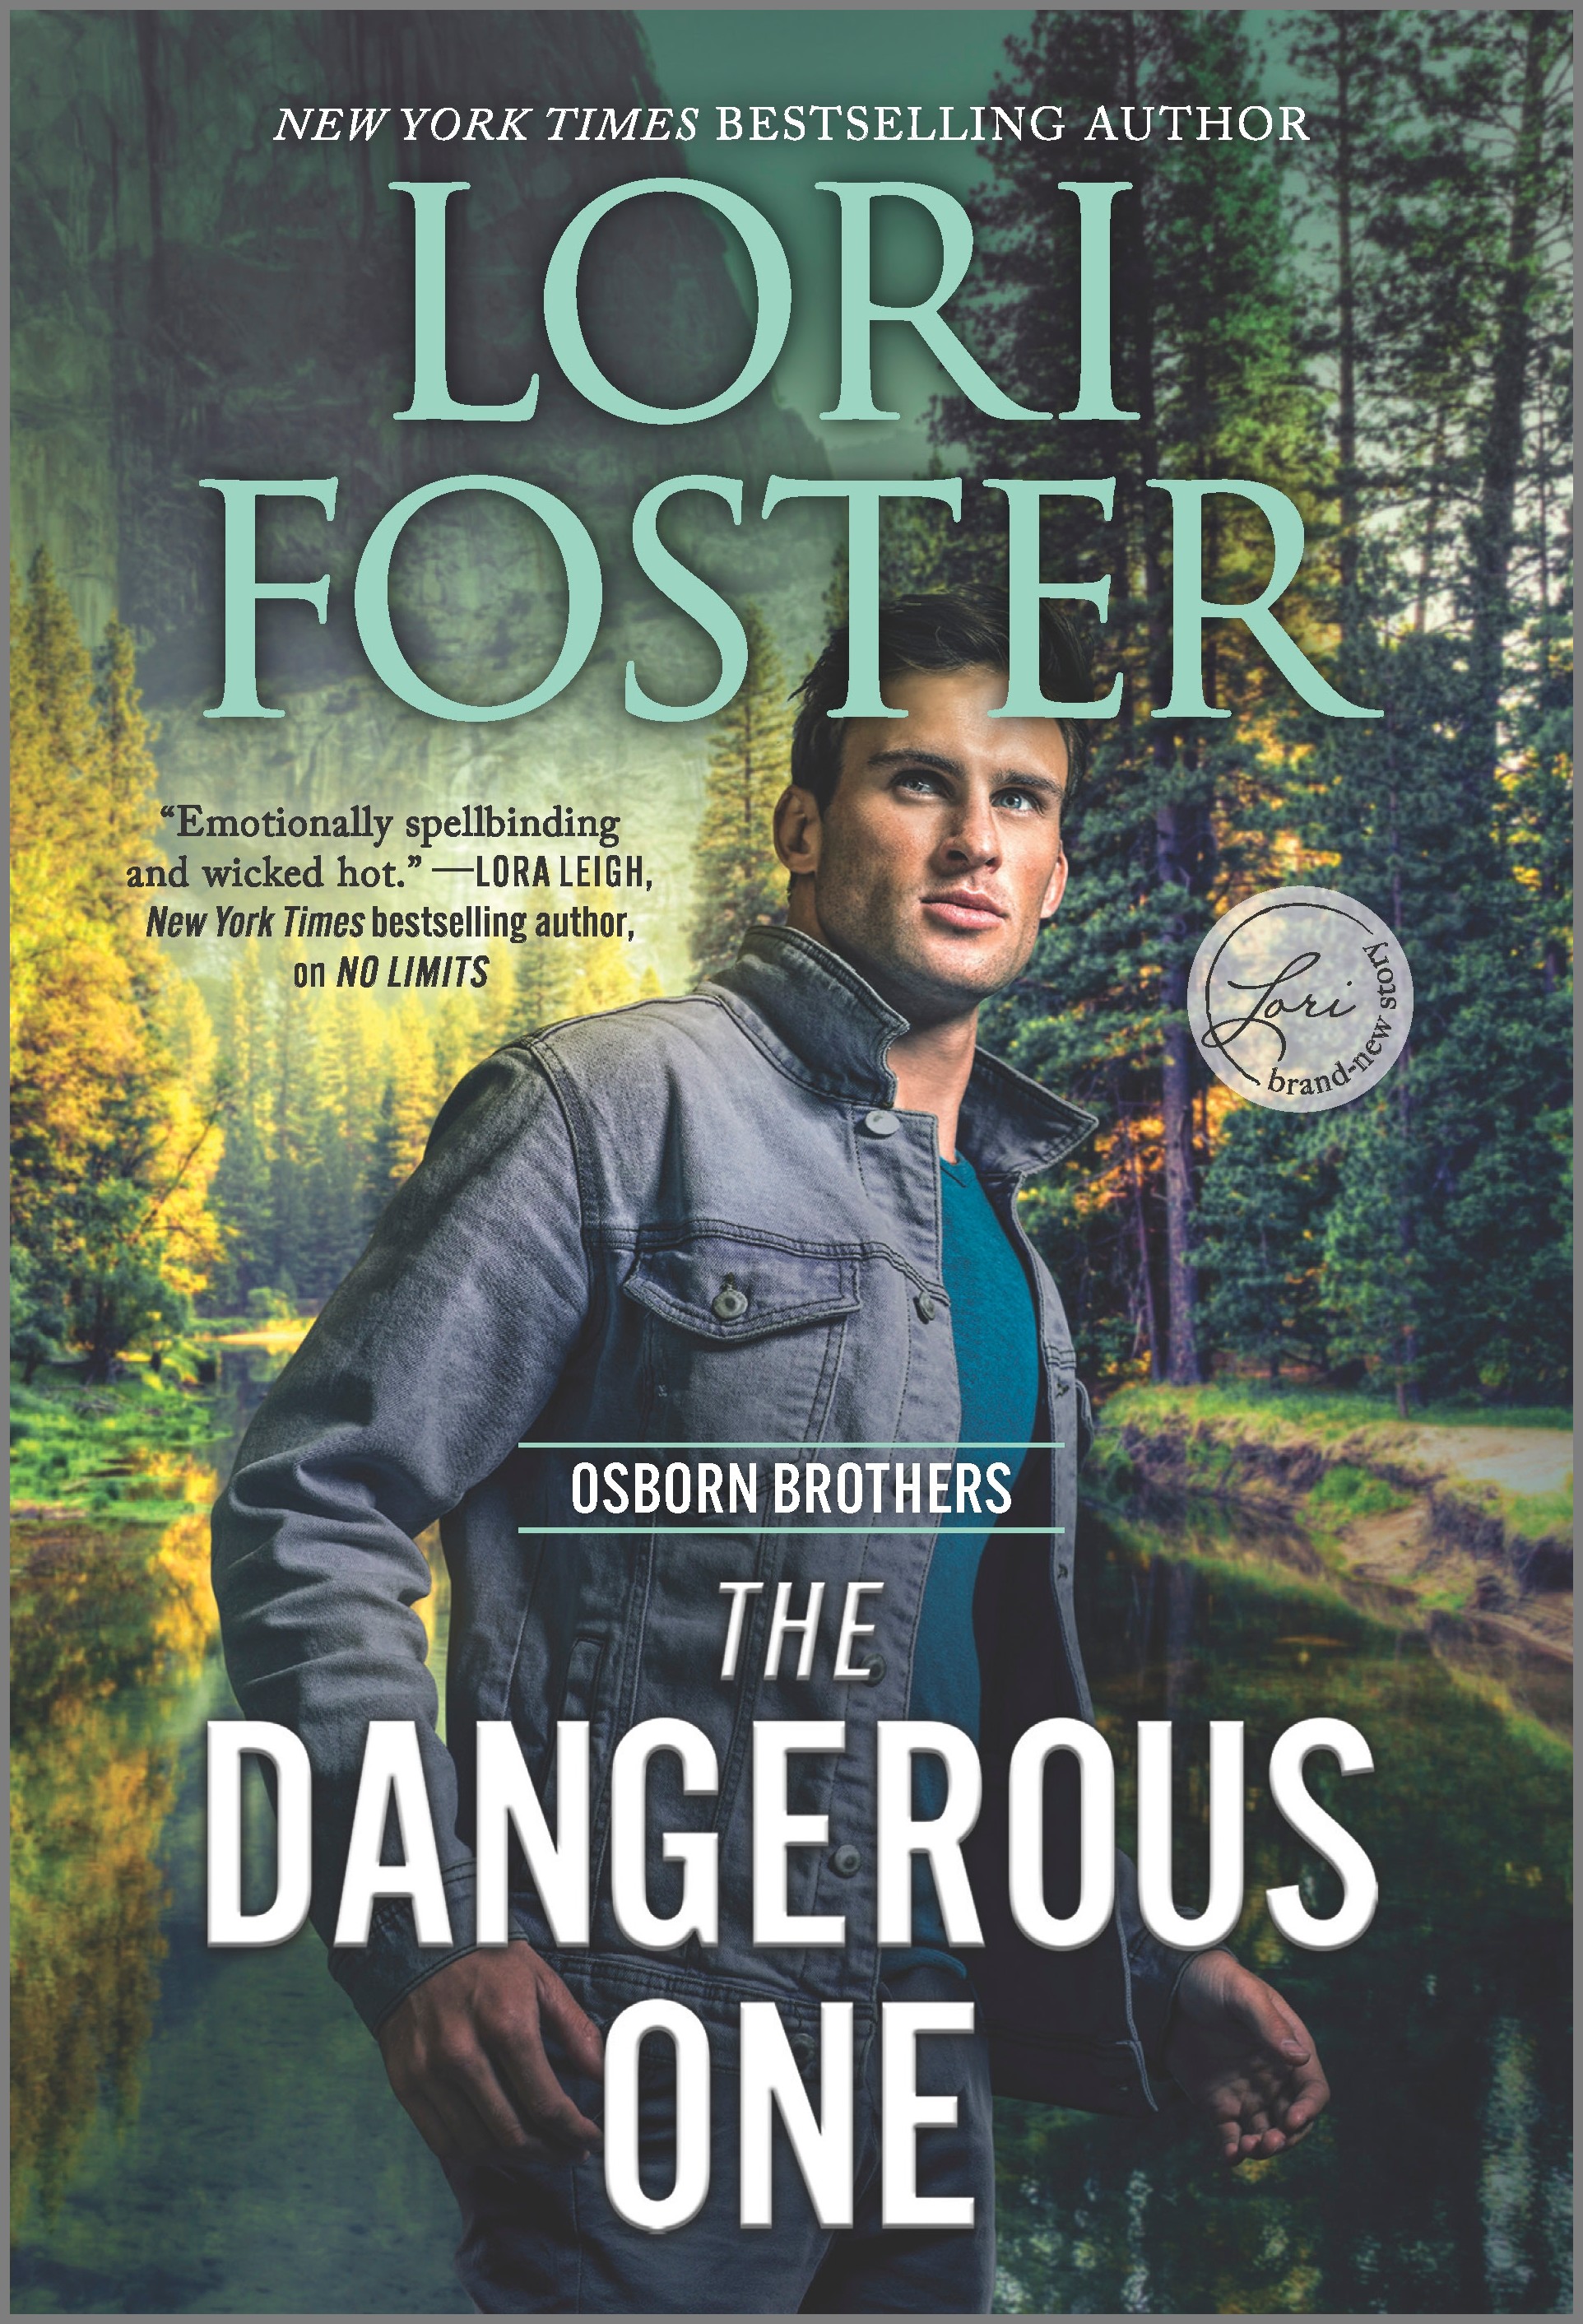 The Dangerous One | Foster, Lori